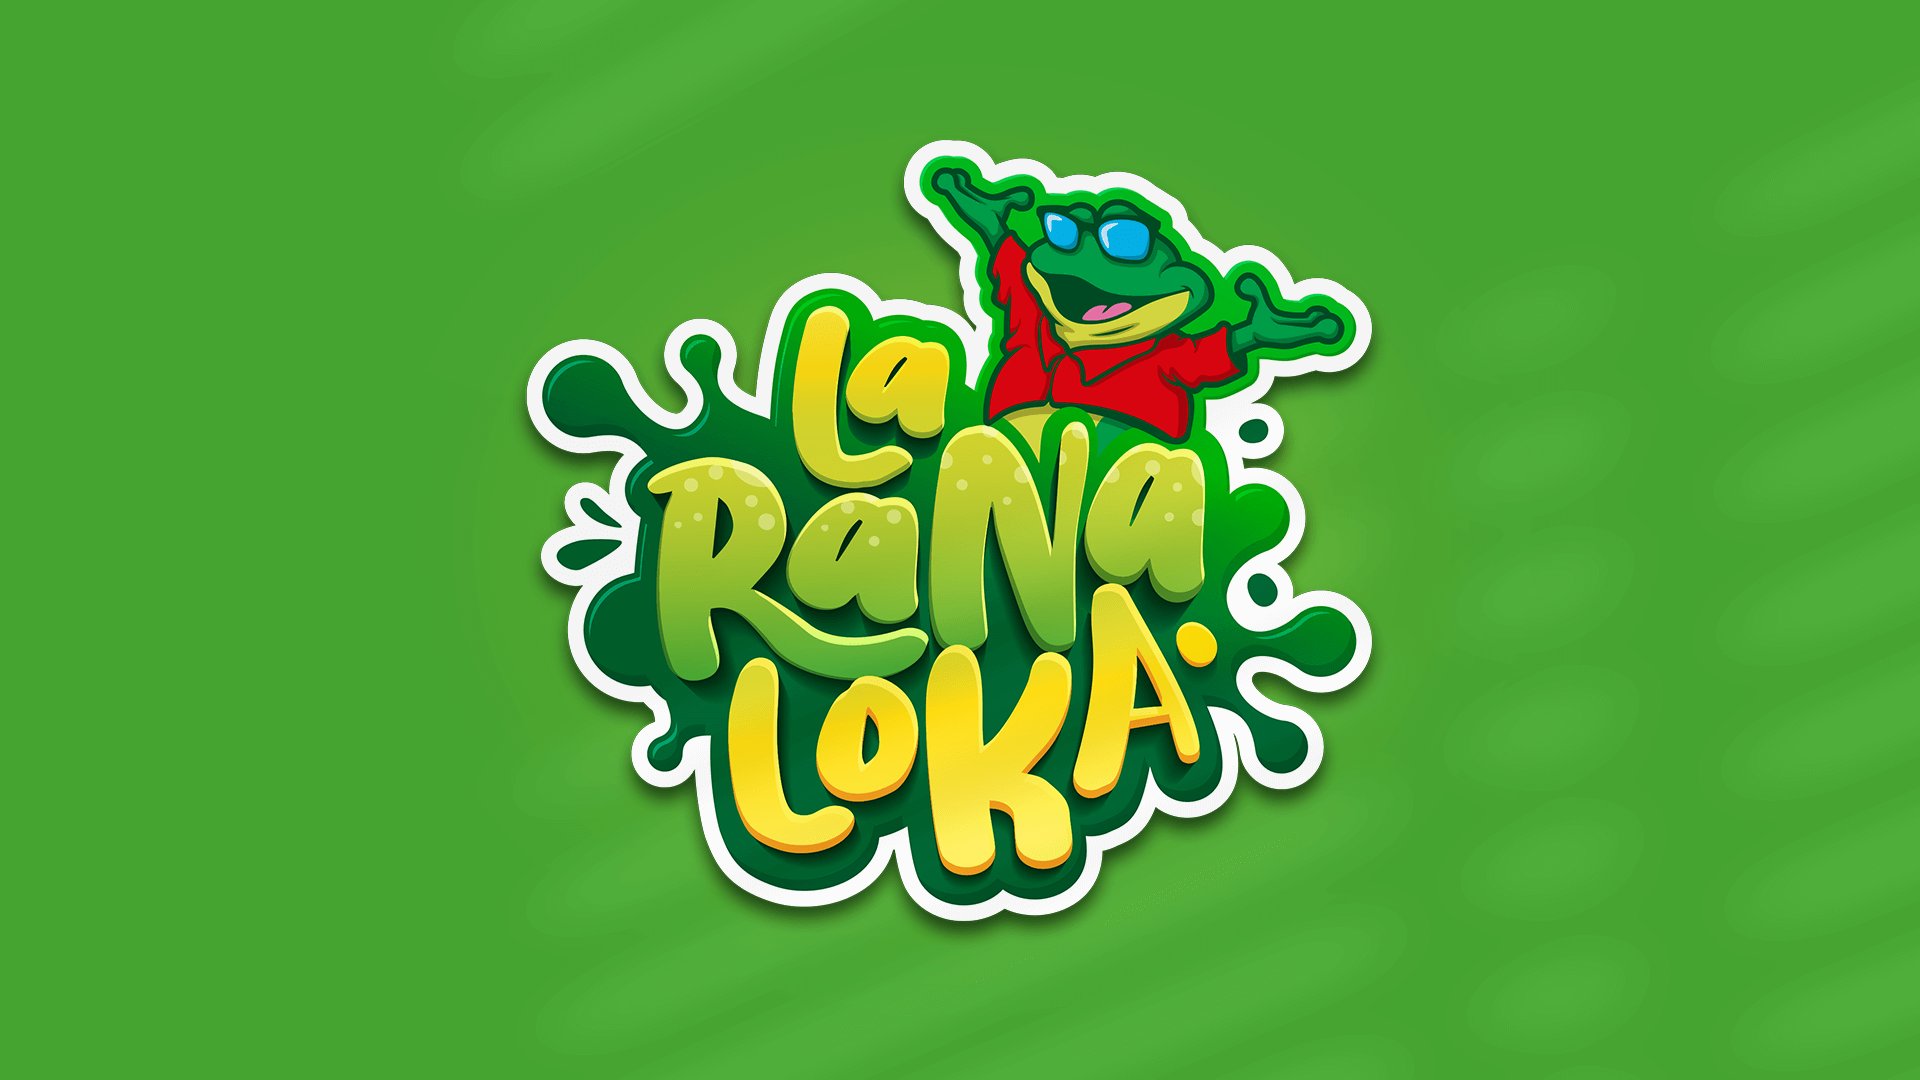 La Rana Loka